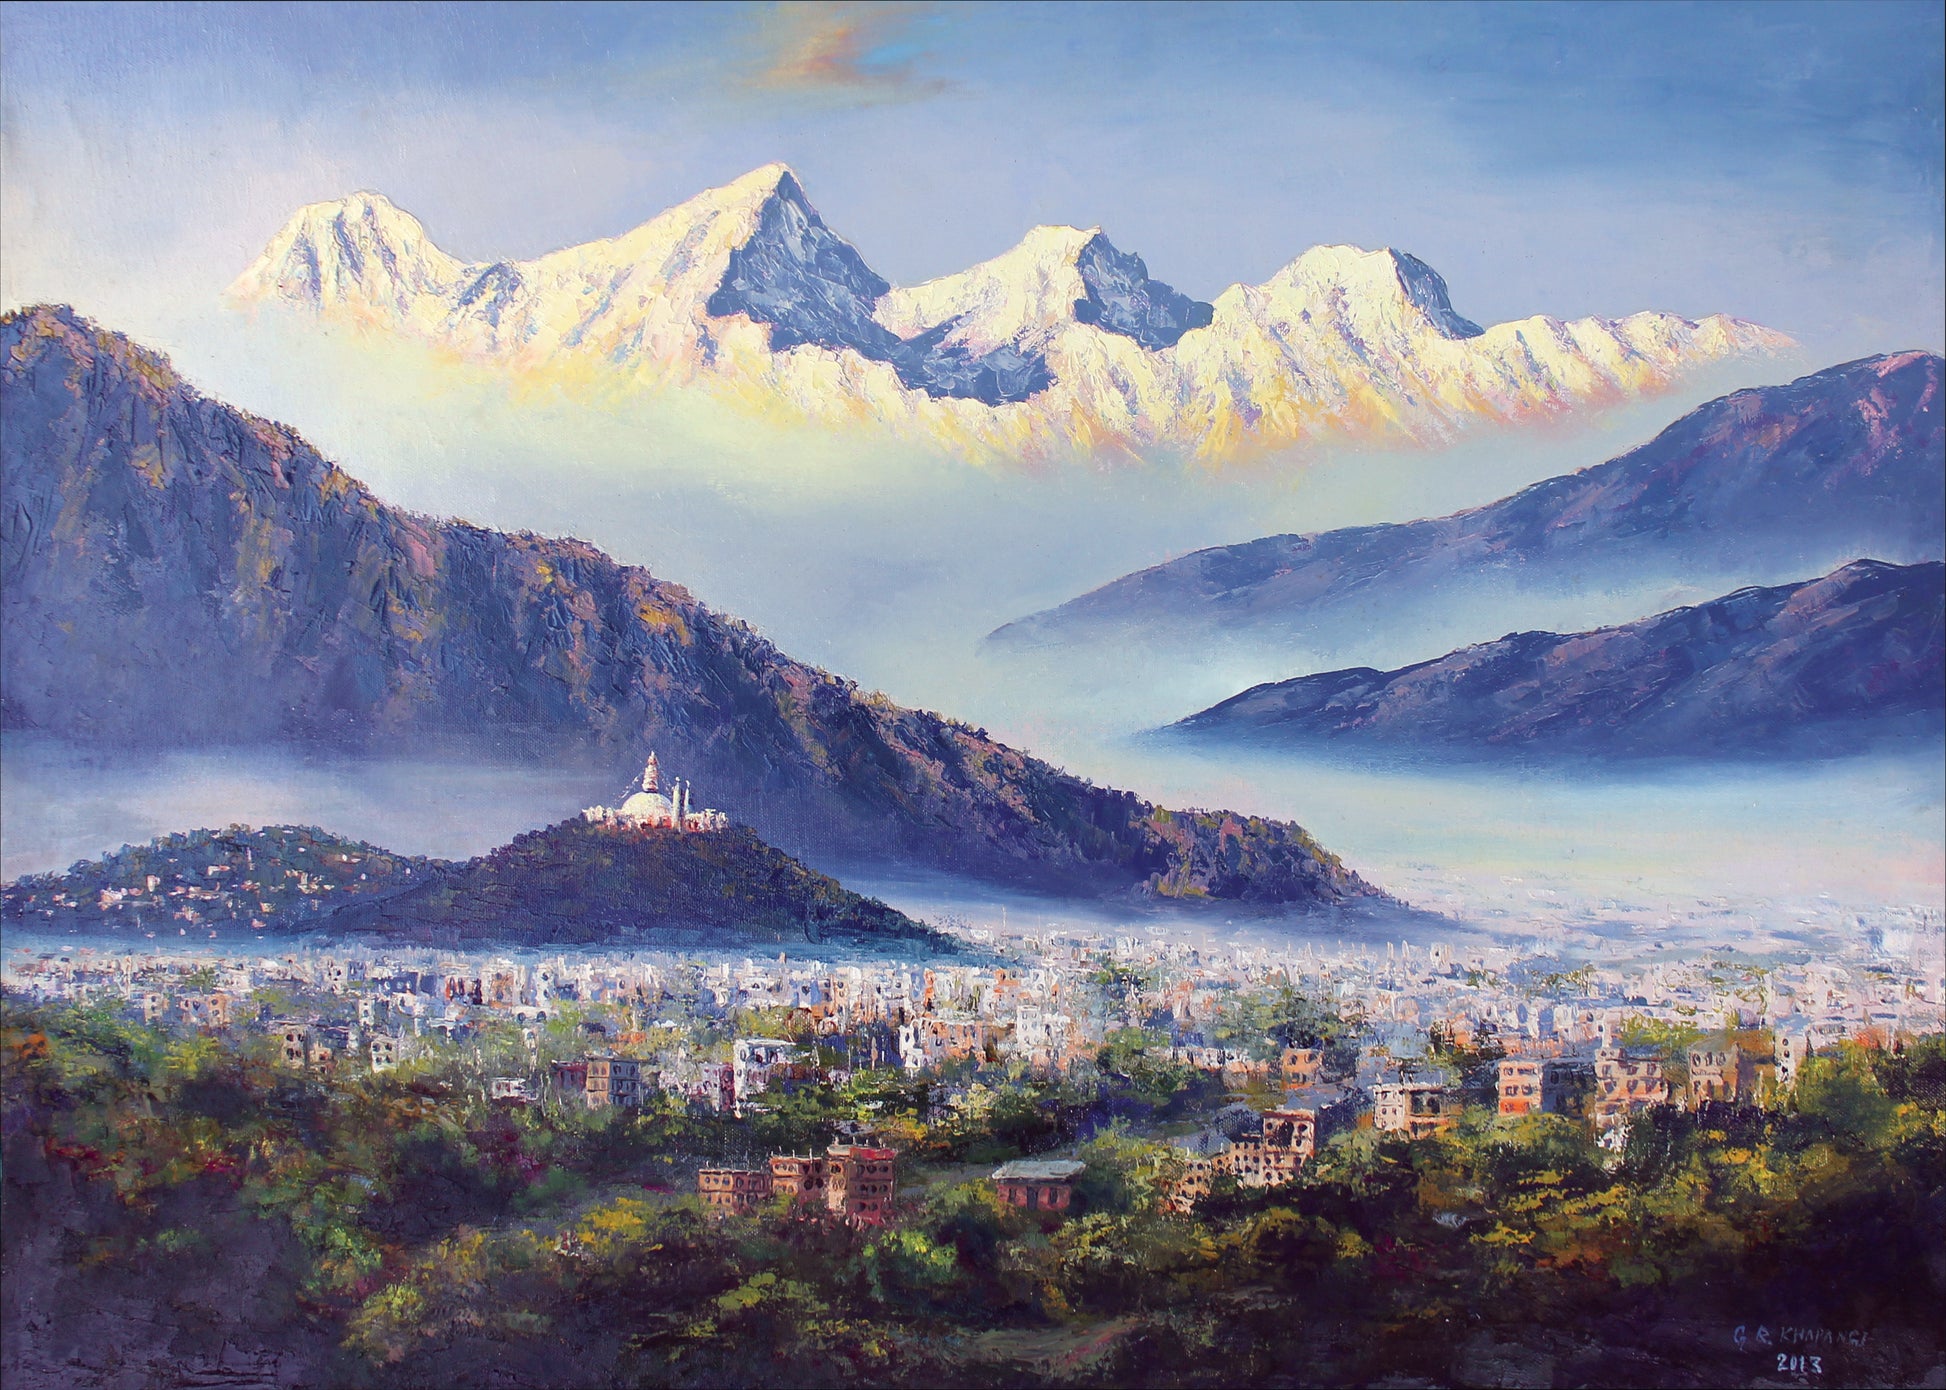 Art Print | Kathmandu valley with Ganesh Himal mountain range and Swoyambhunath temple ( Monkey temple) in the background.